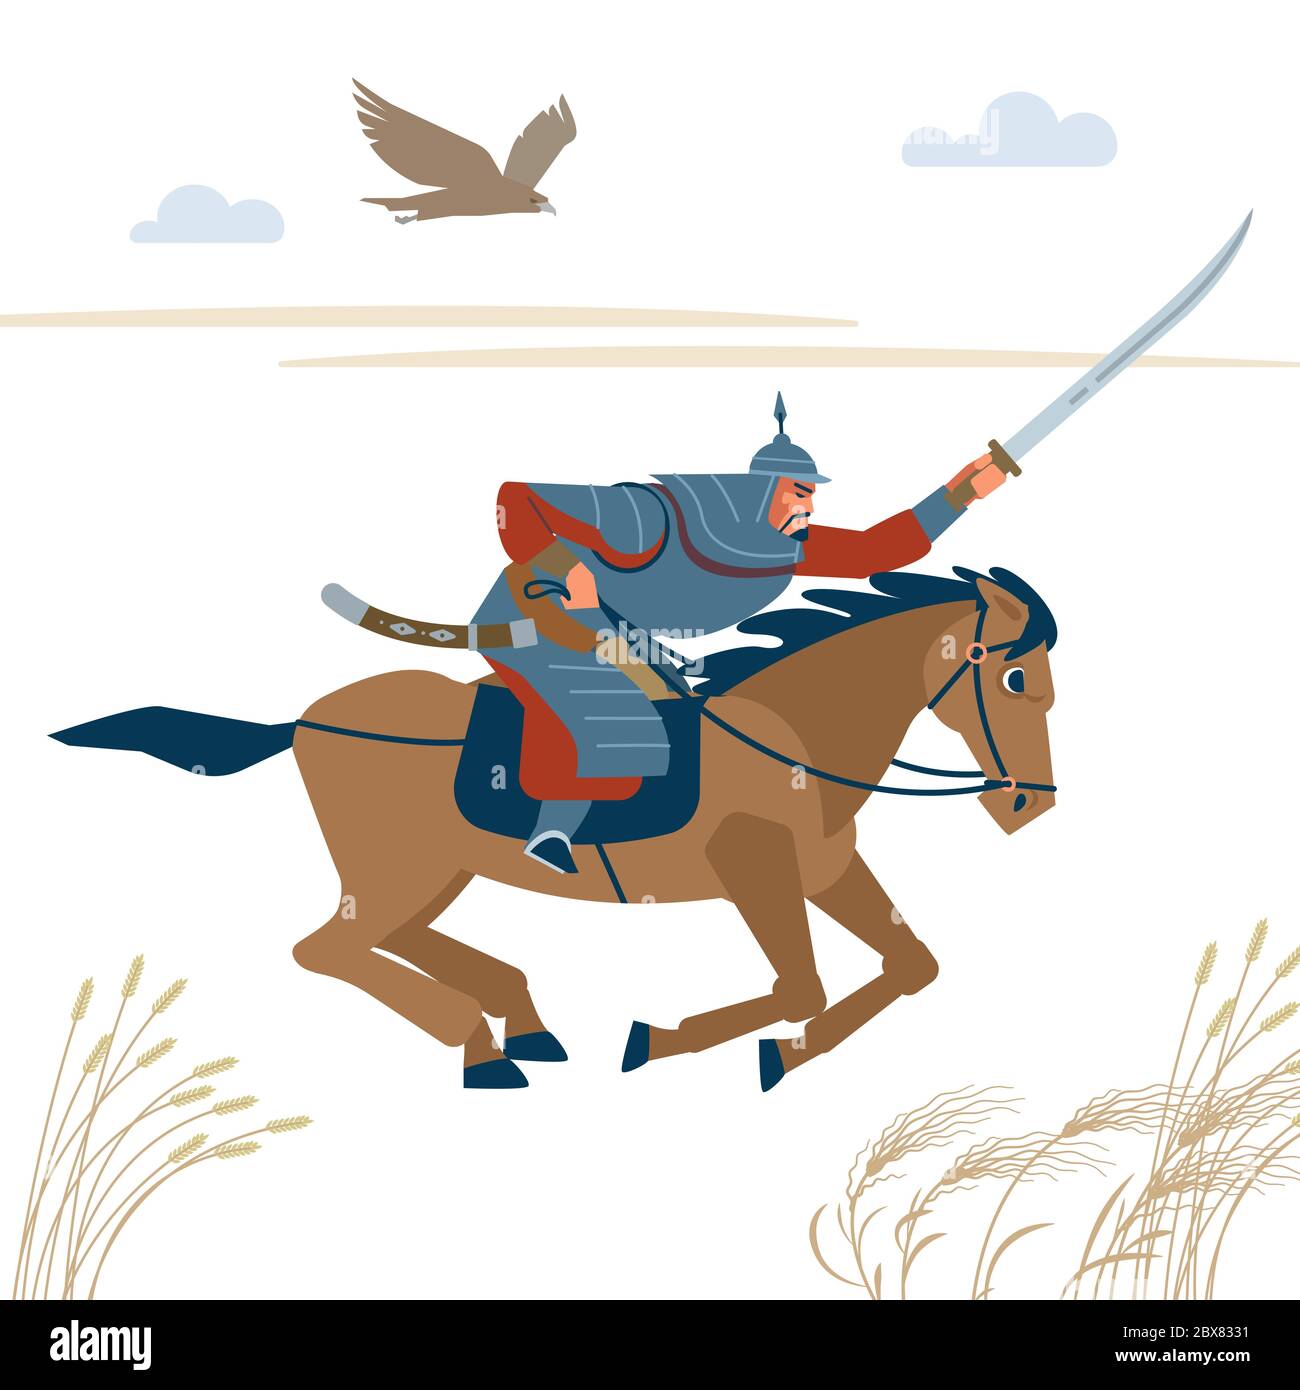 Zentralasiatischer Krieger Reiter, Angriff im Kampf. Isolierte Vektor-Illustration in flachem Cartoon-Stil Stock Vektor